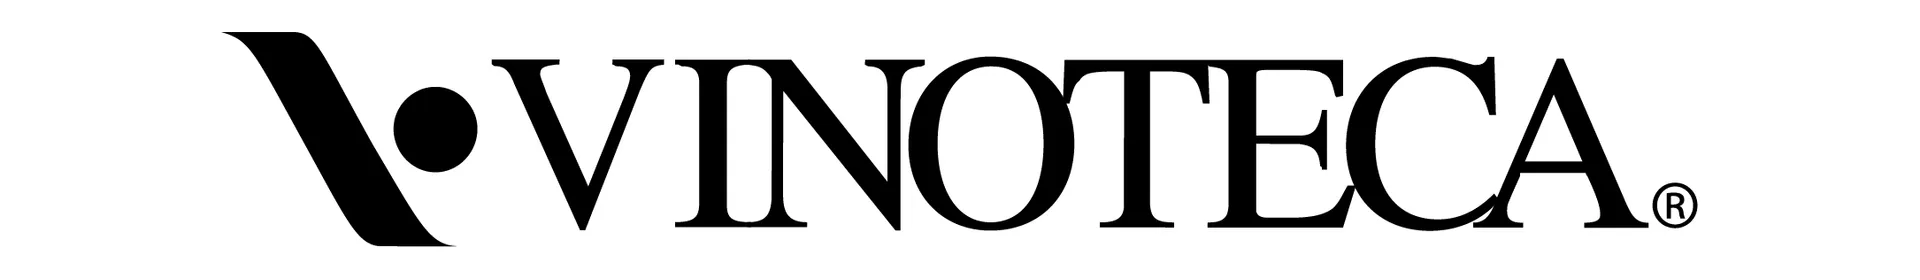 VINOTECA logo